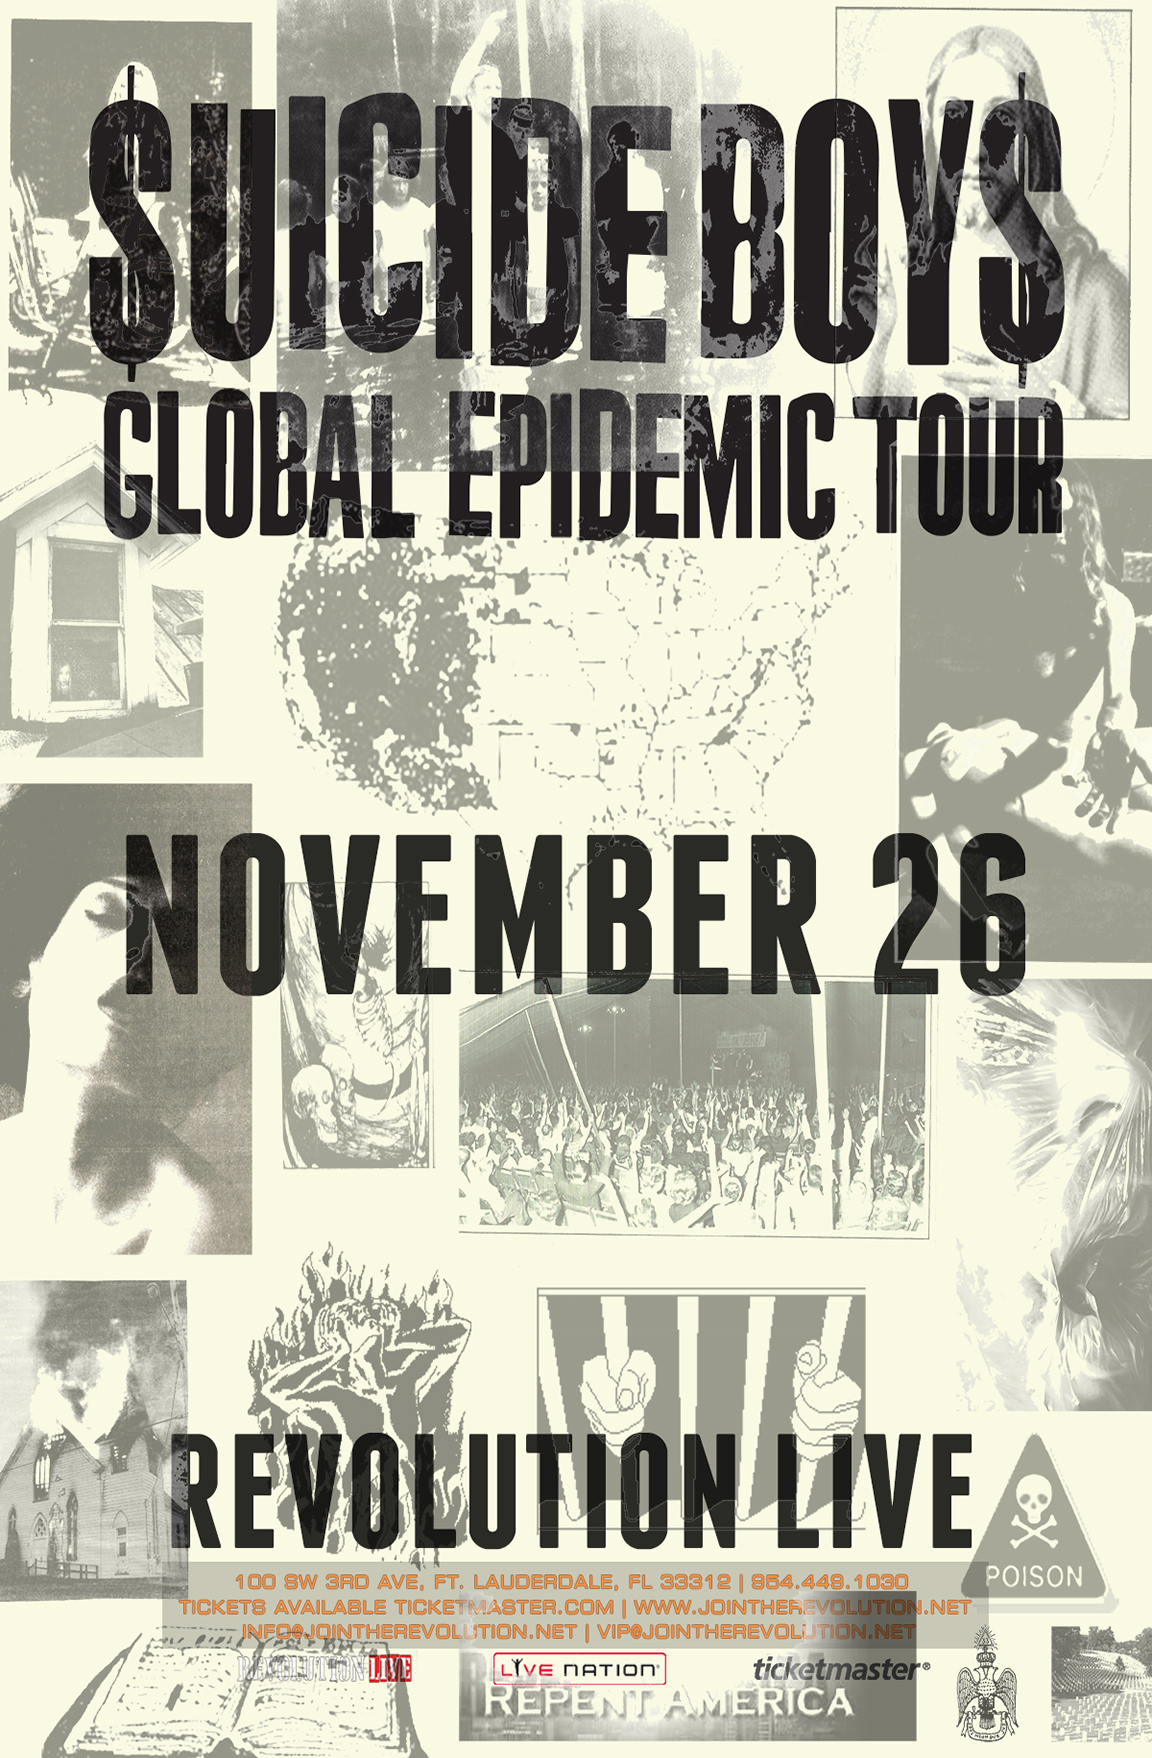 UICIDEBOY Global Epidemic Tour Revolution Live